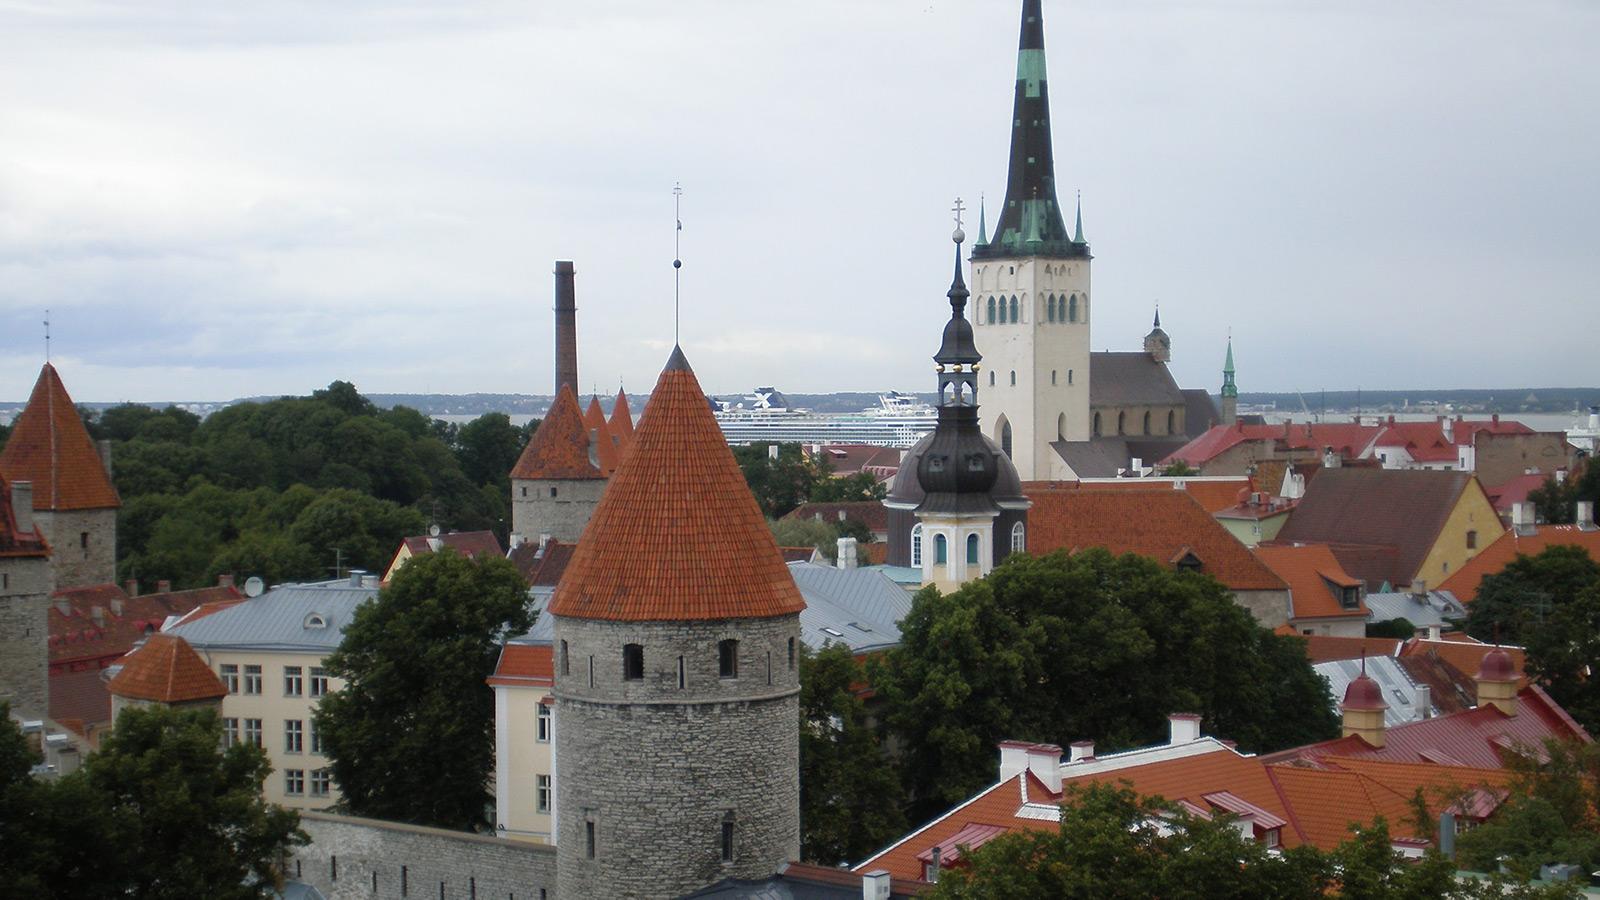 Skyline of Tallinn, Estonia by Eileen Kunkler